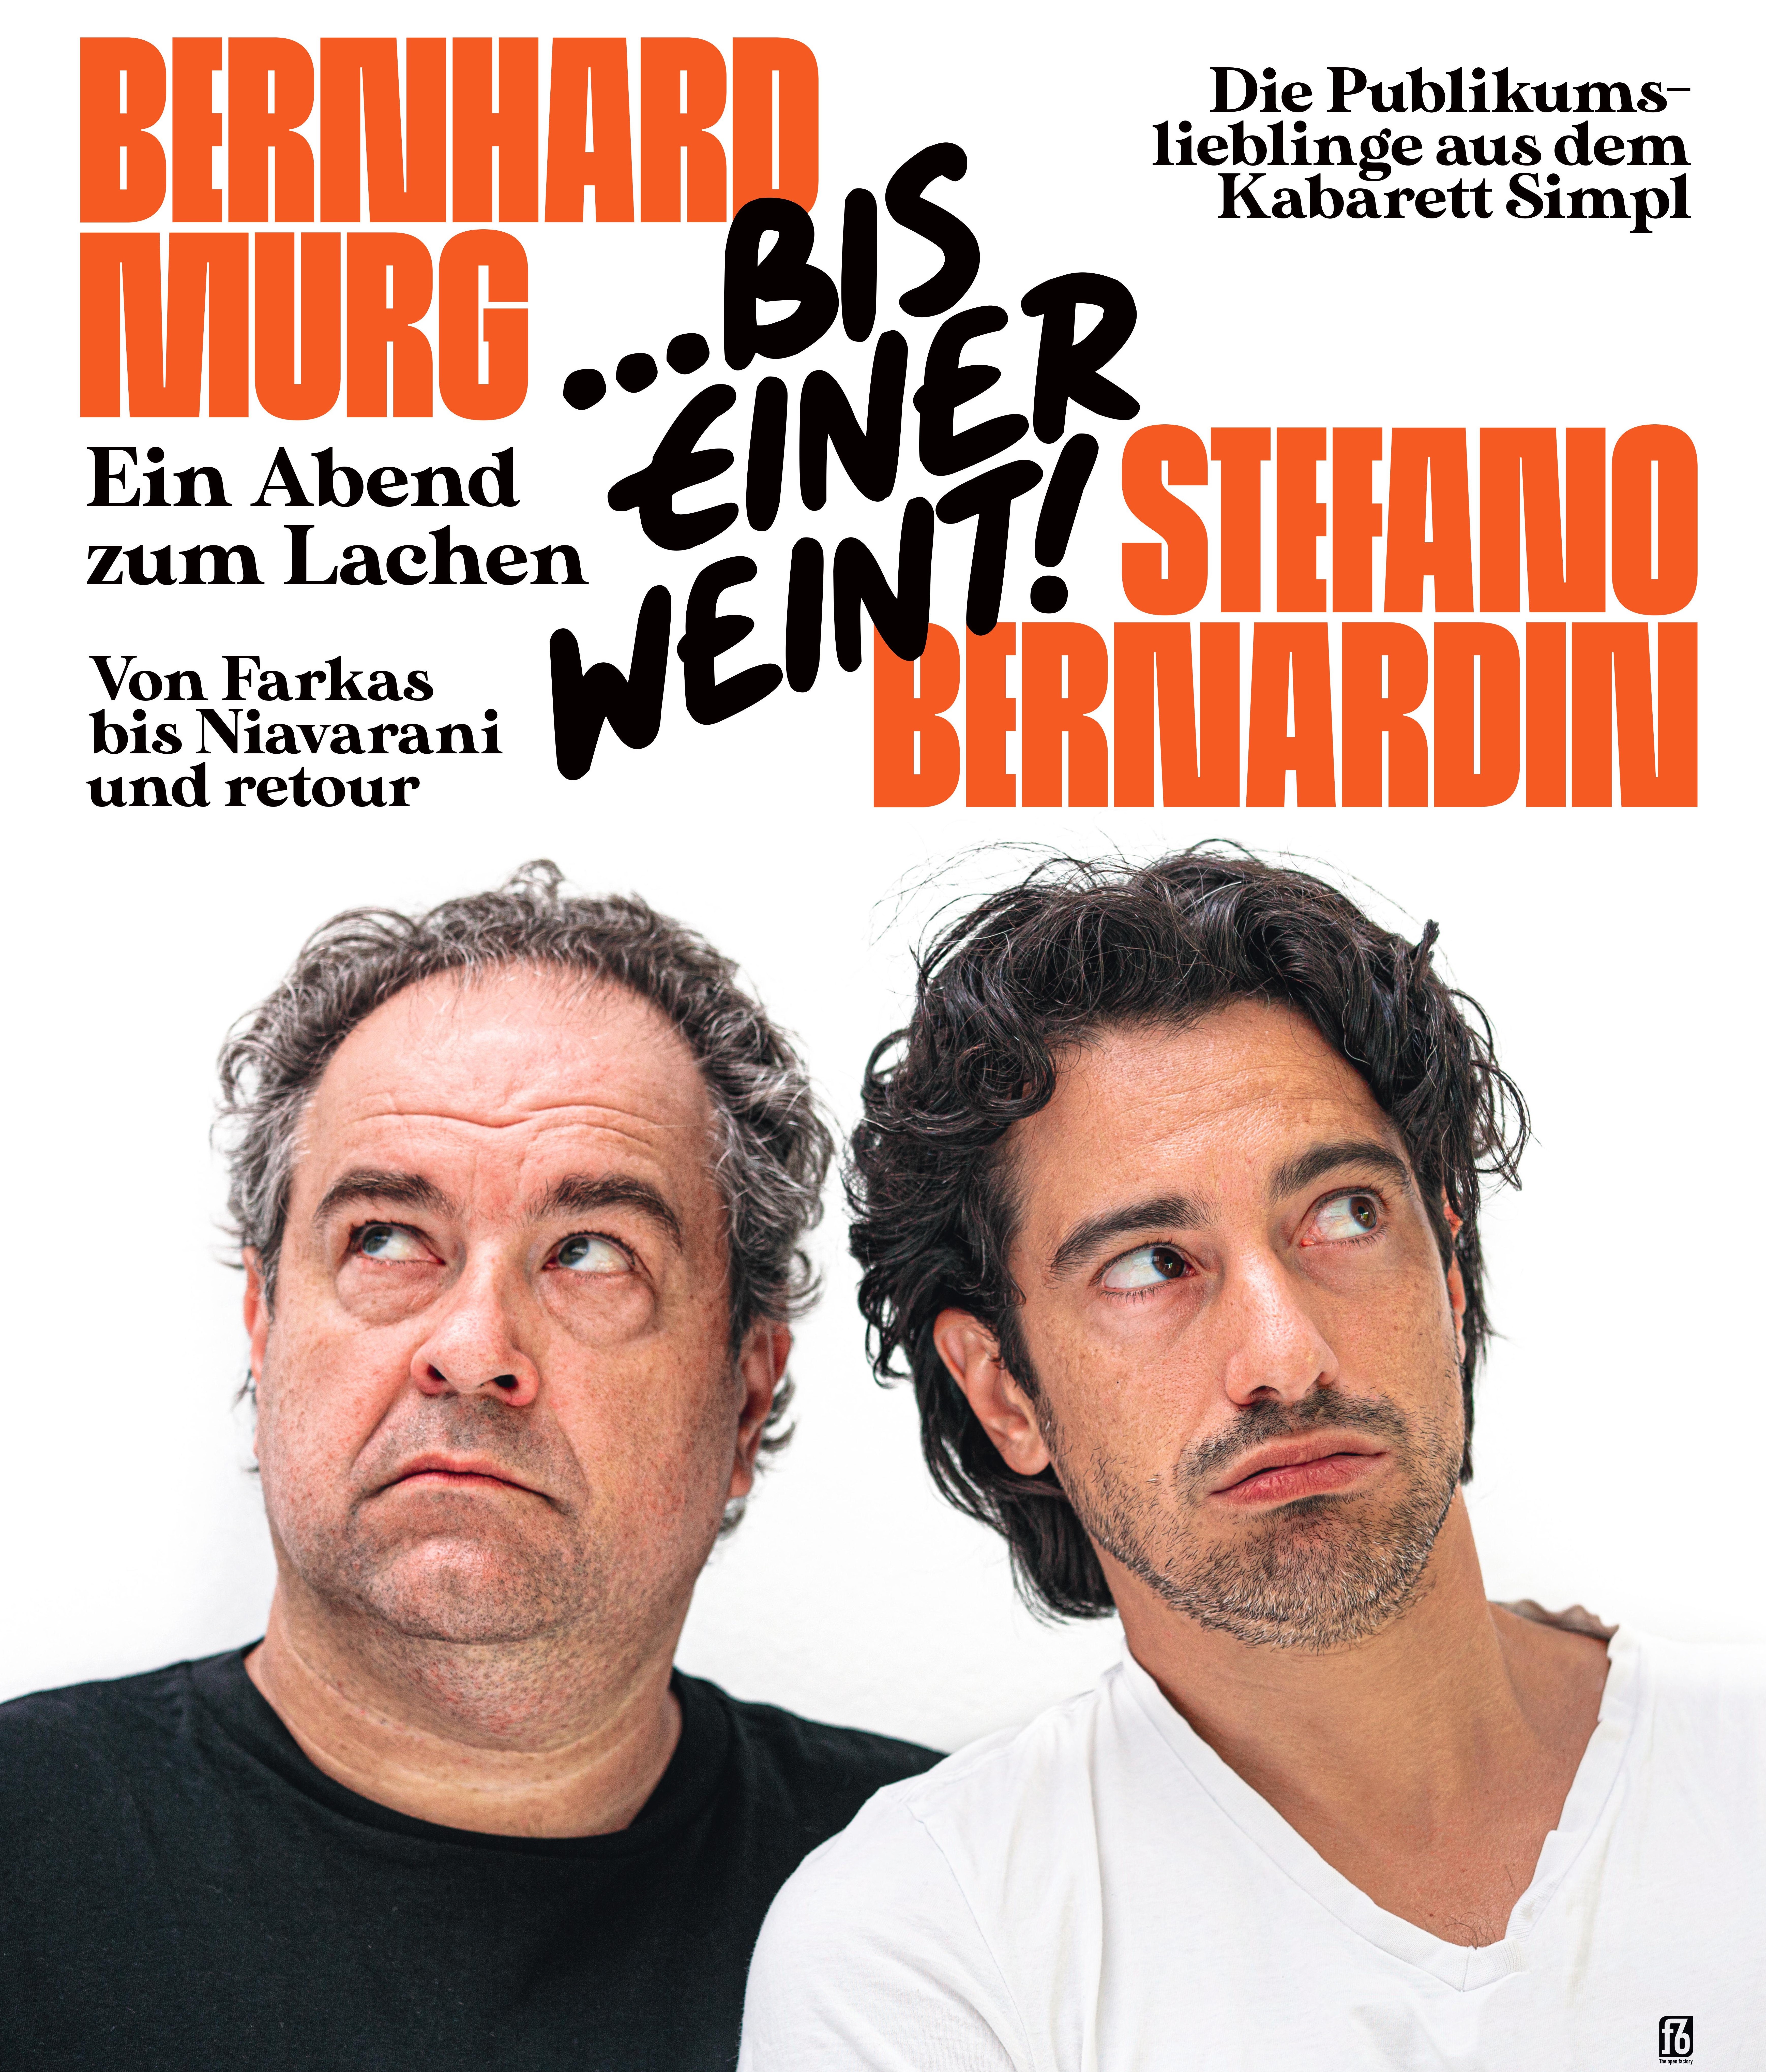 Bernhard Murg & Stefano Bernardin: „Bis einer weint …!“ – 8. Oktober 2023